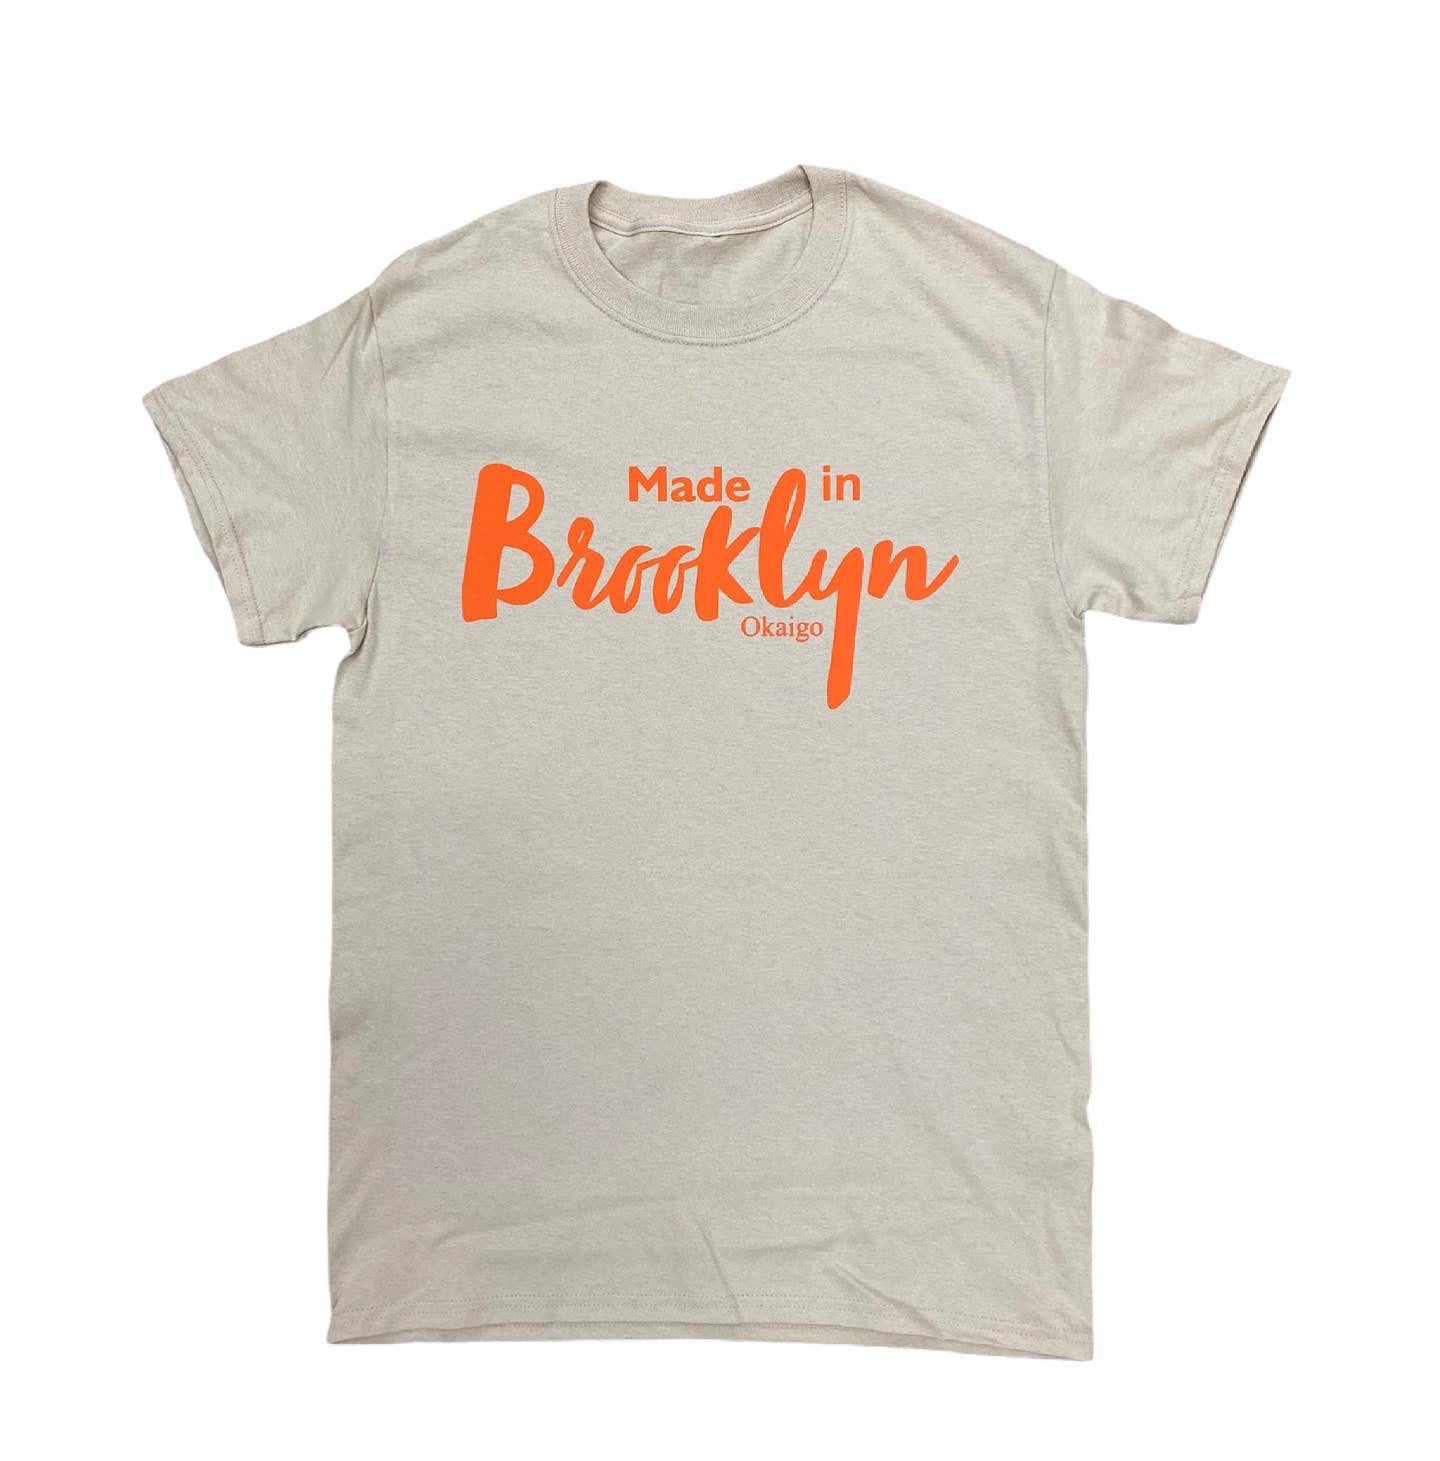 "Made in Brooklyn" short sleeve shirt